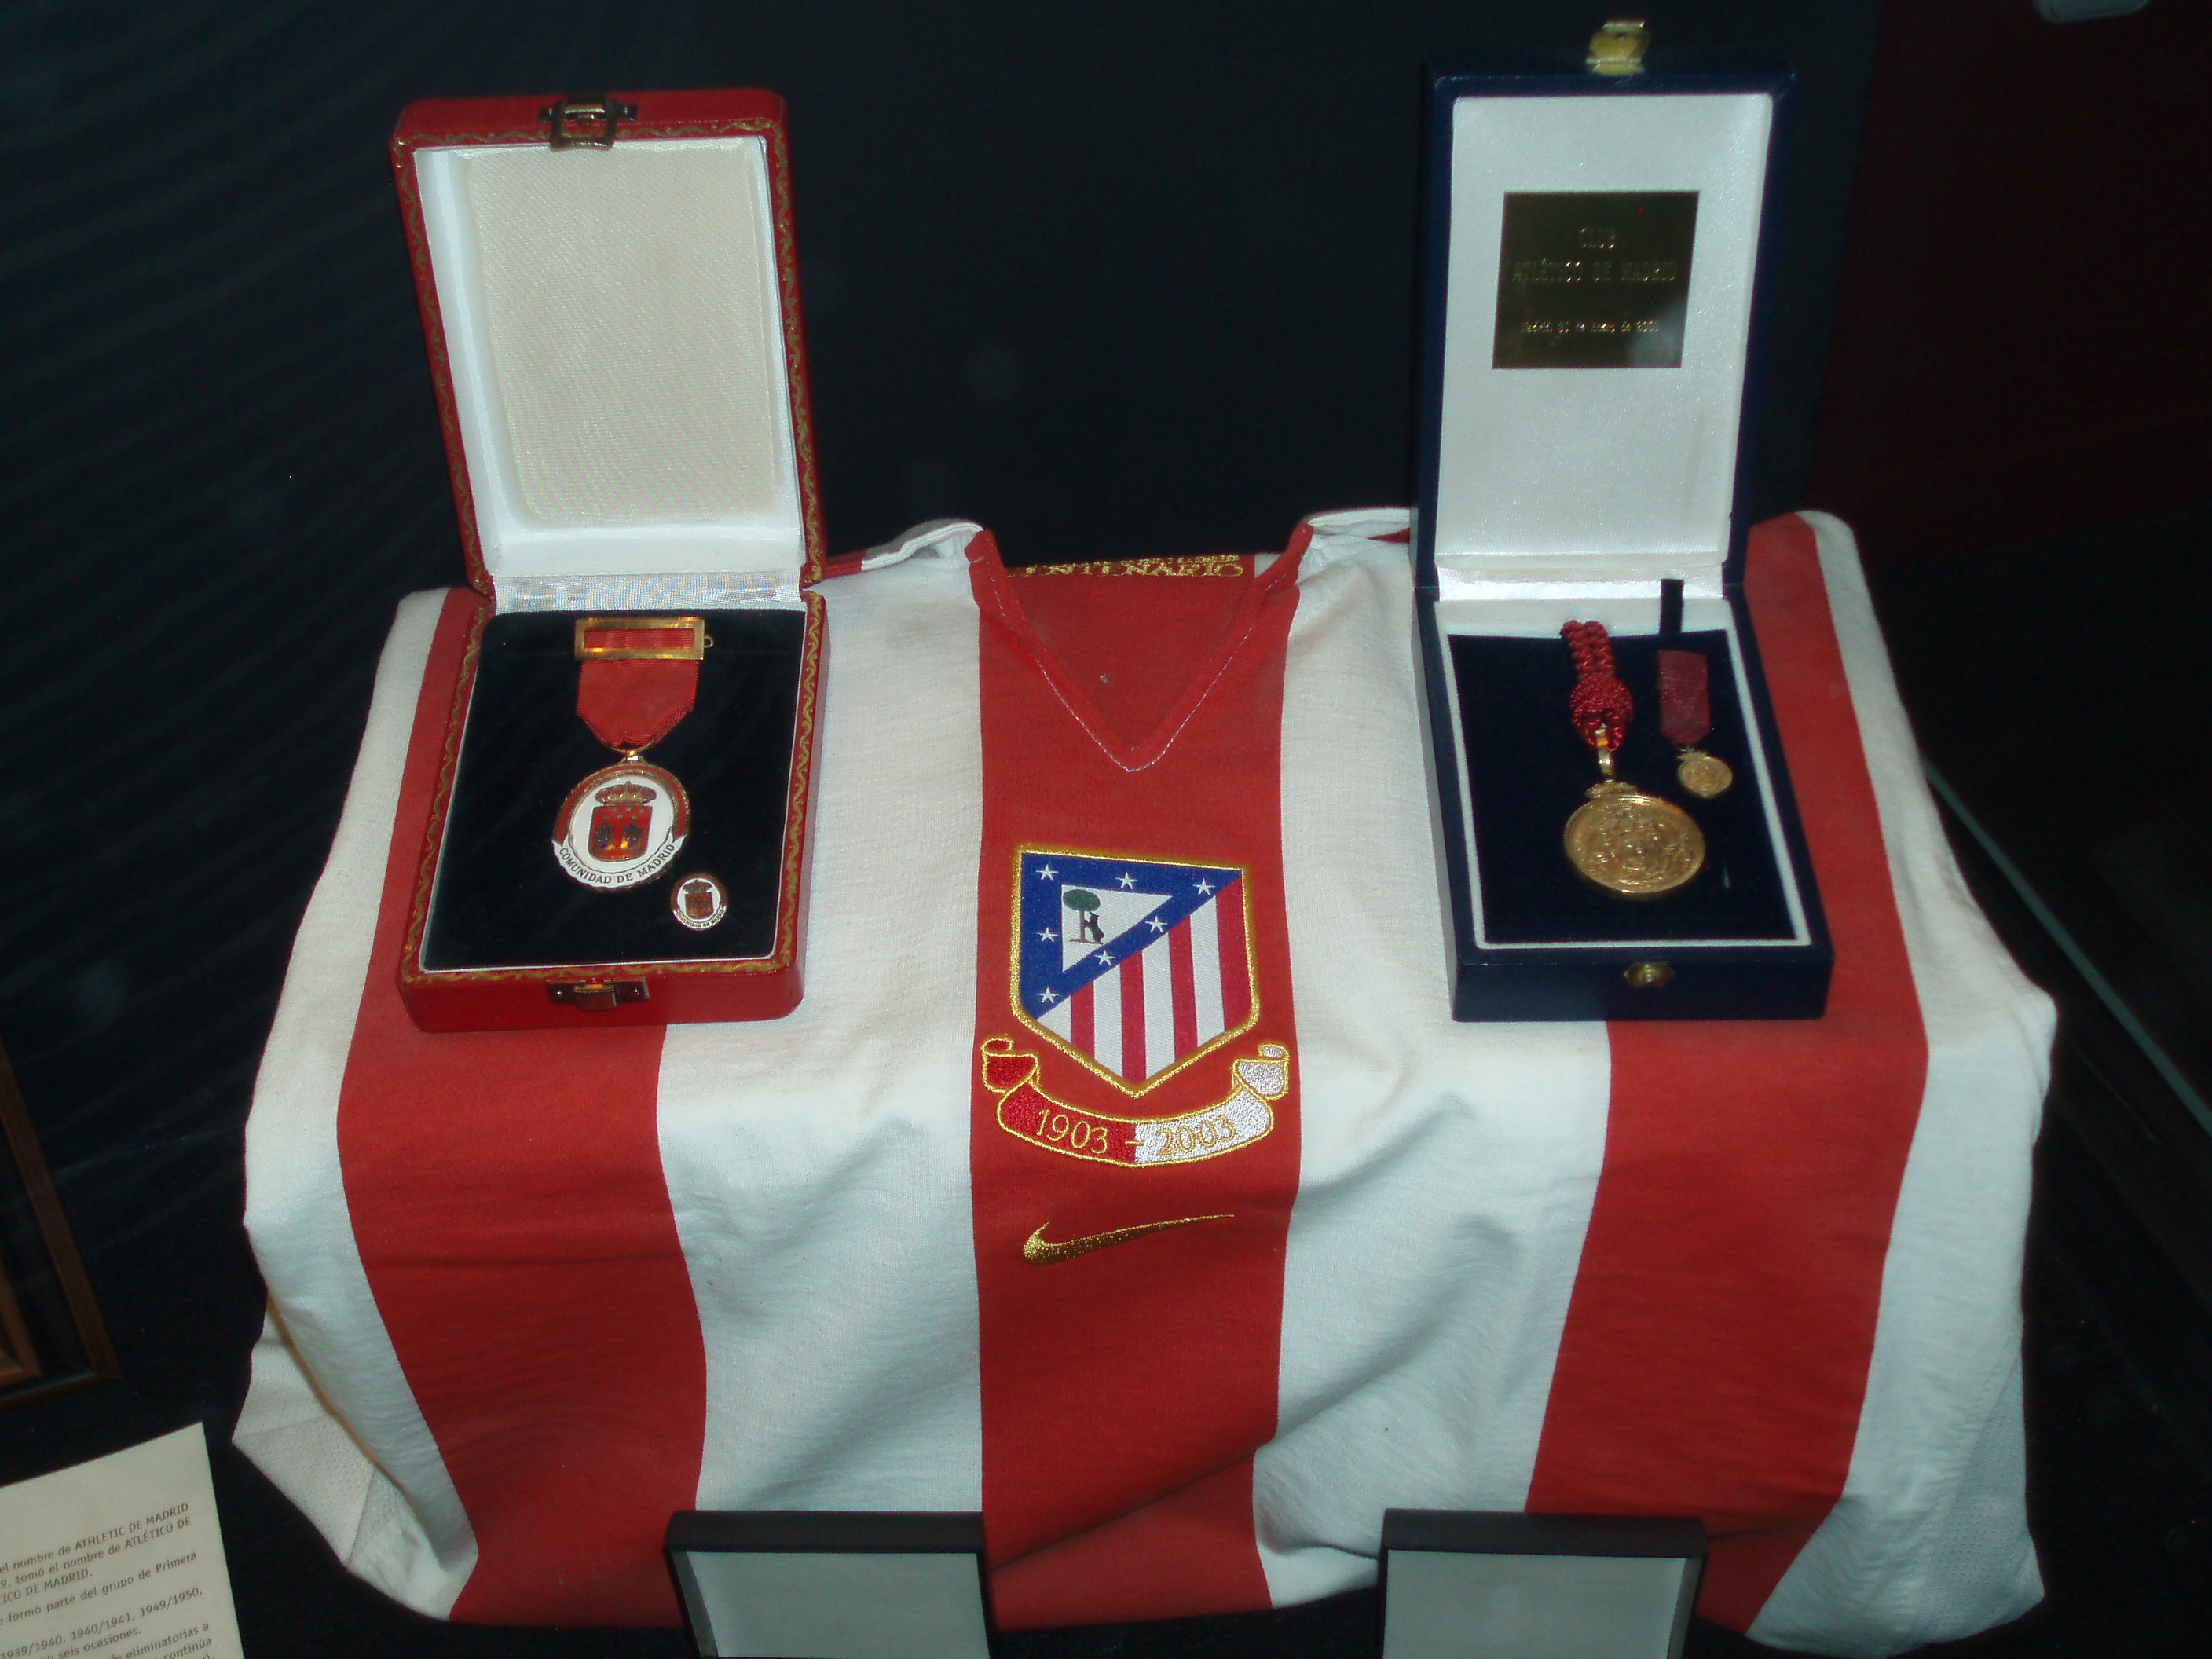 File:Centenario del Atlético Madrid.JPG - Wikimedia Commons